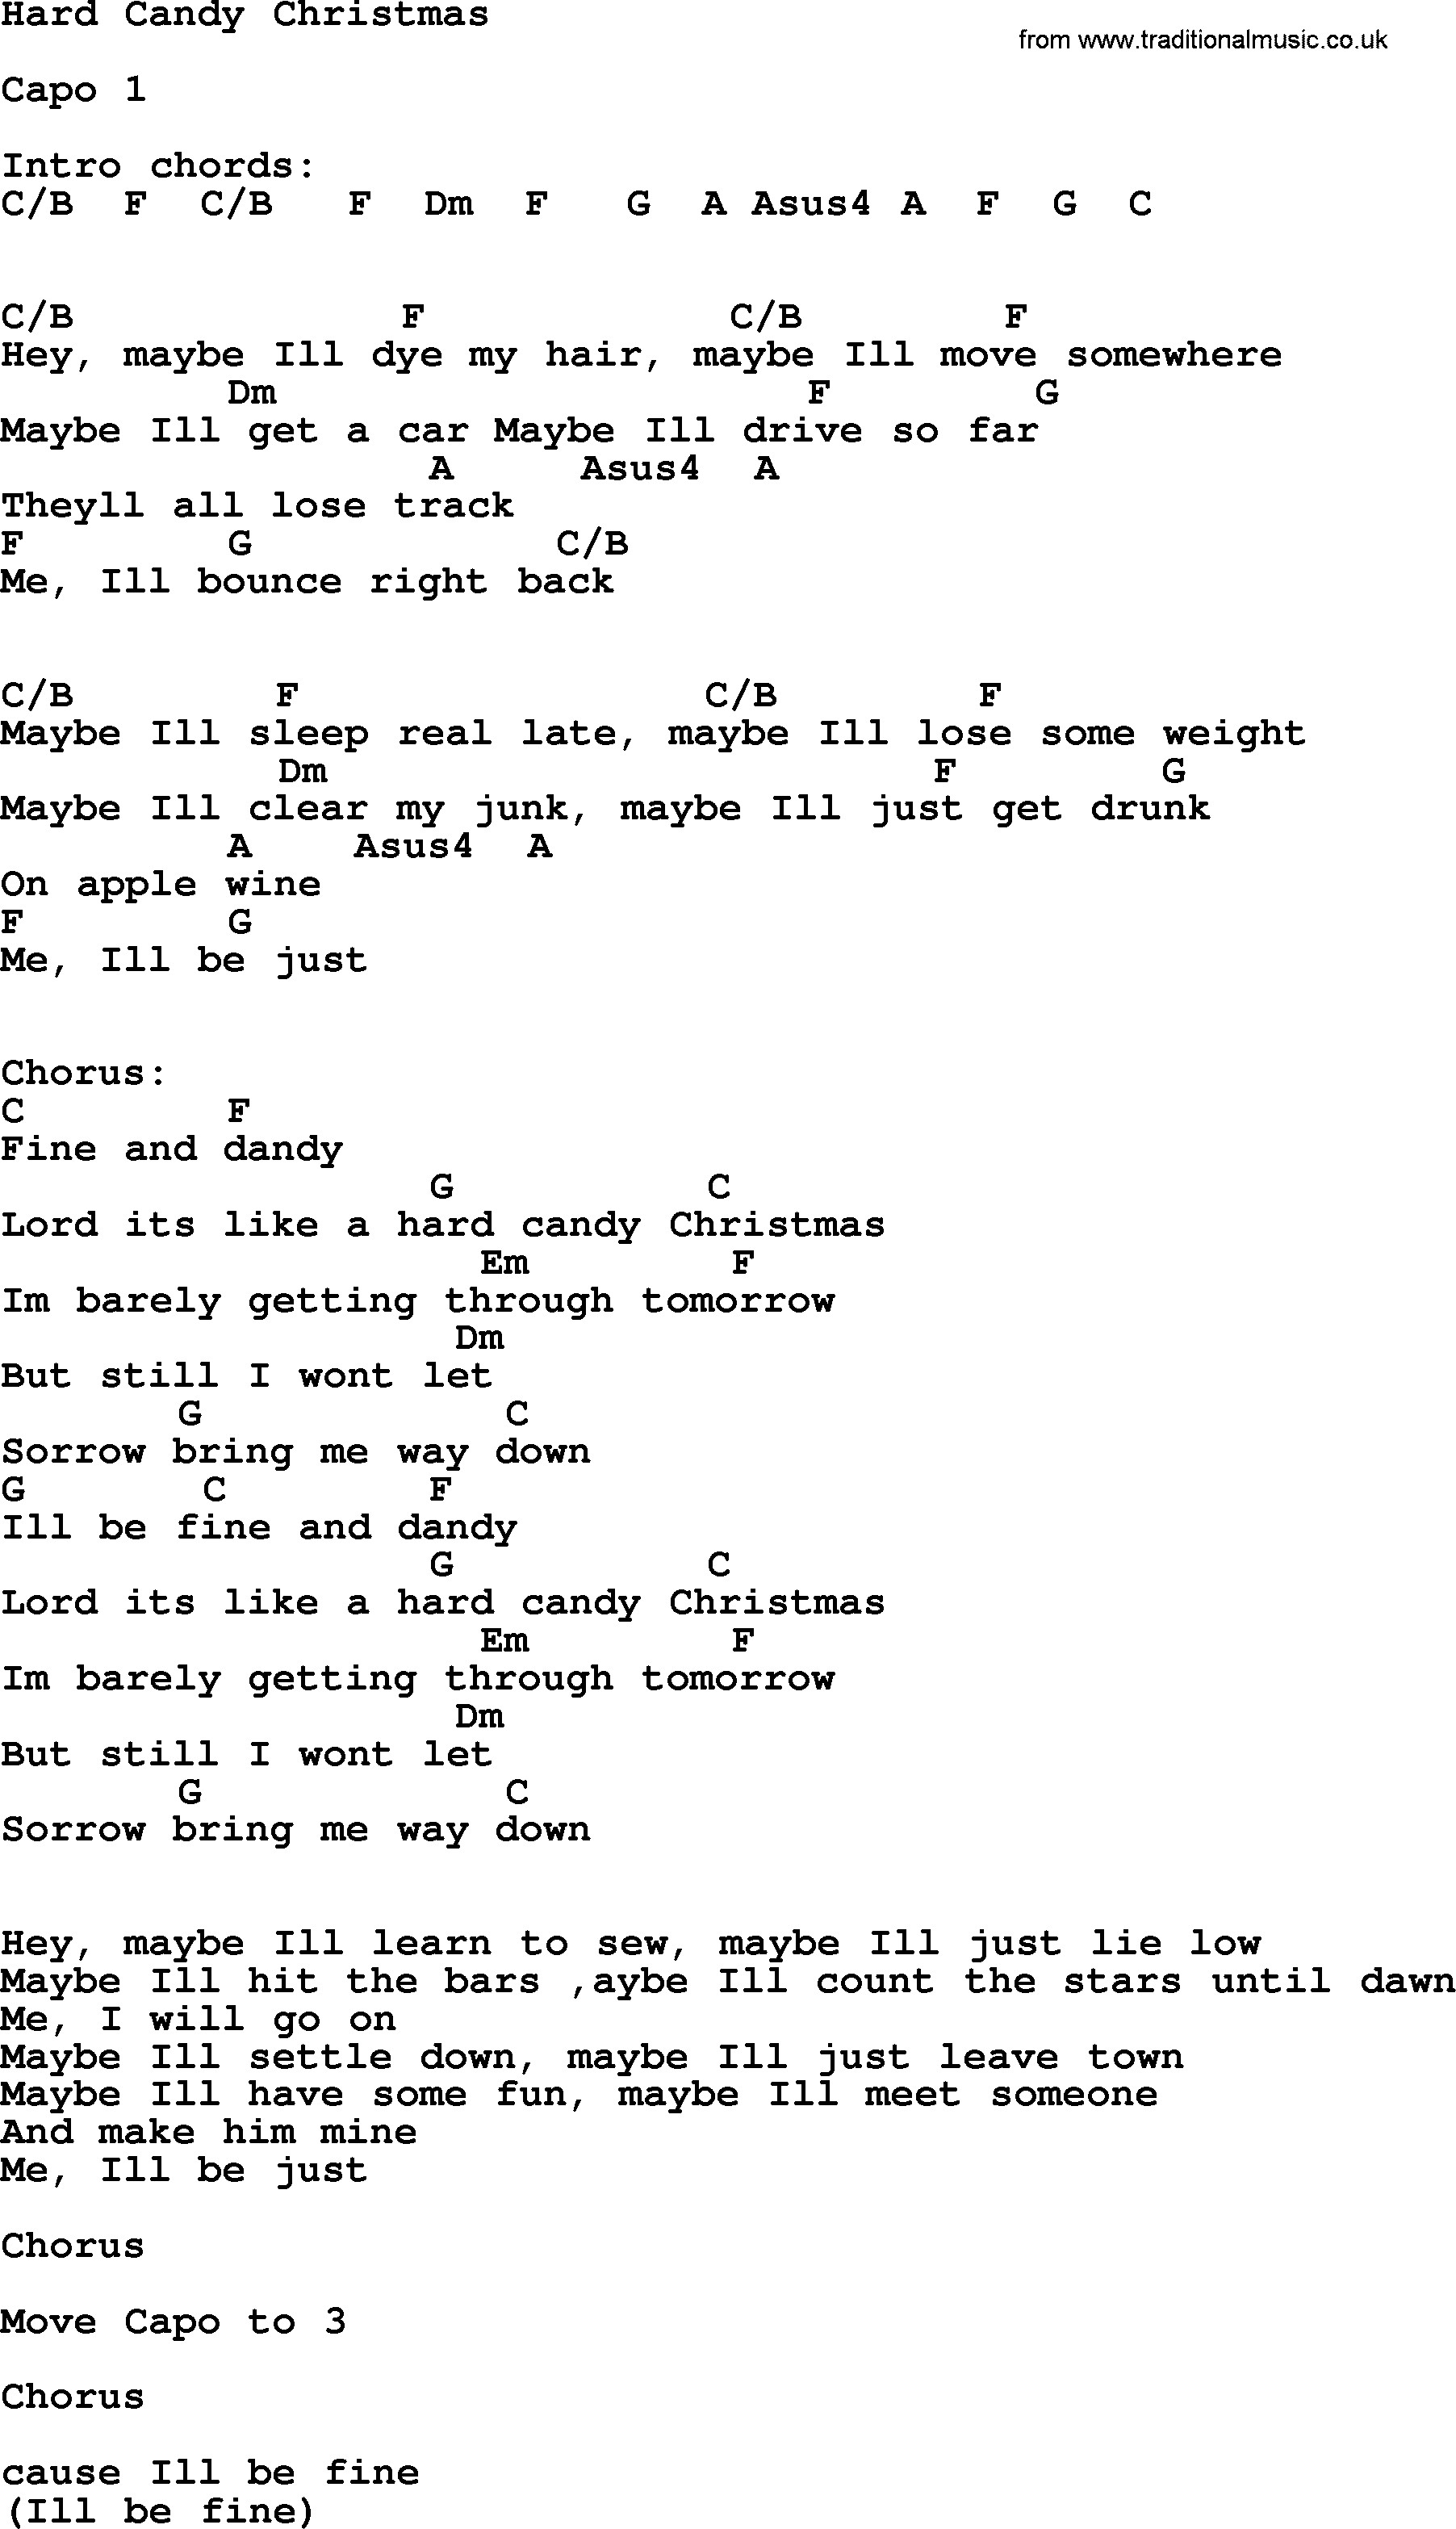 Lyrics Hard Candy Christmas
 Dolly Parton song Hard Candy Christmas lyrics and chords